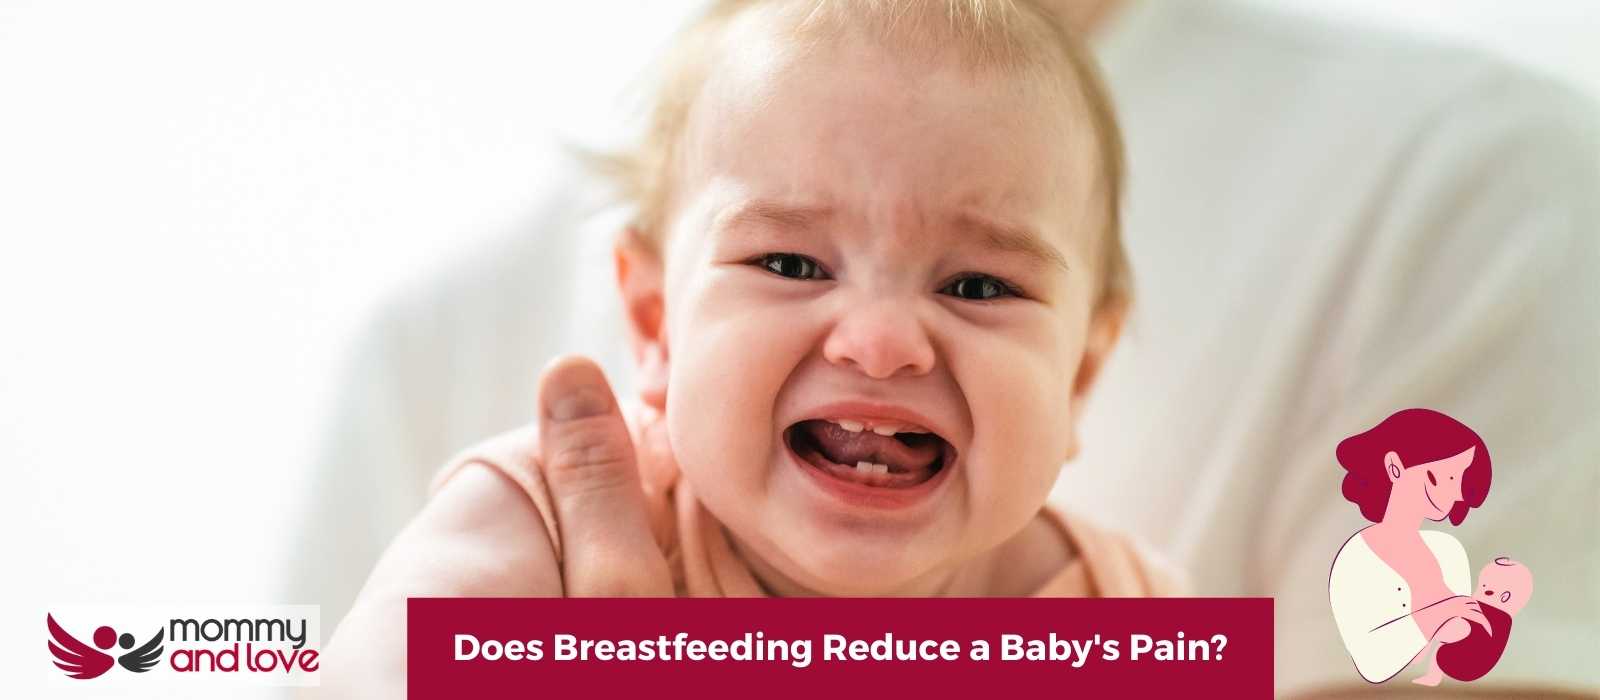 Does Breastfeeding Reduce a Baby's Pain